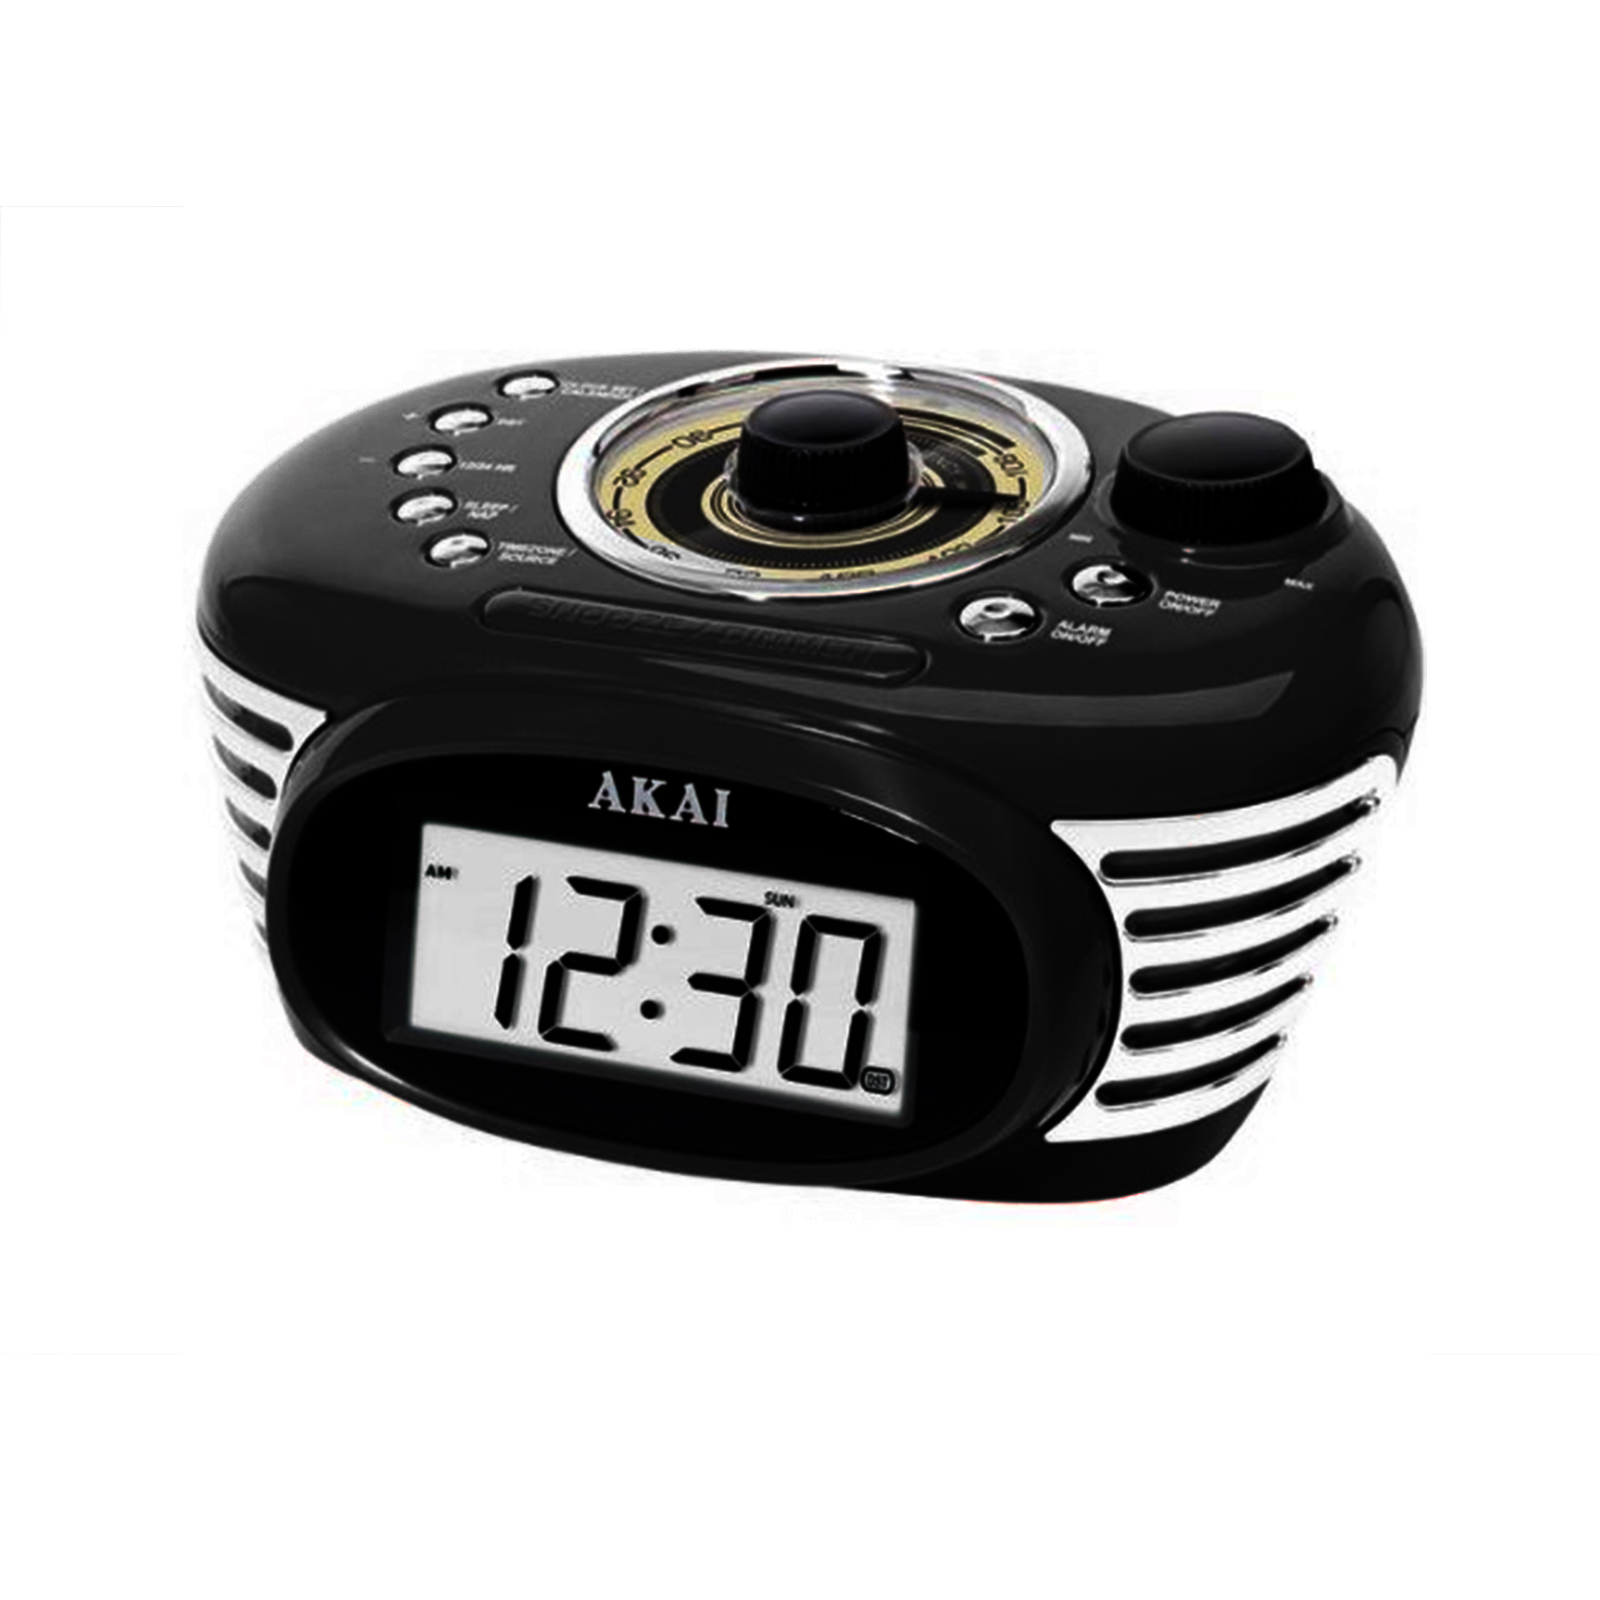 Akai Retro Alarm Clock Radio